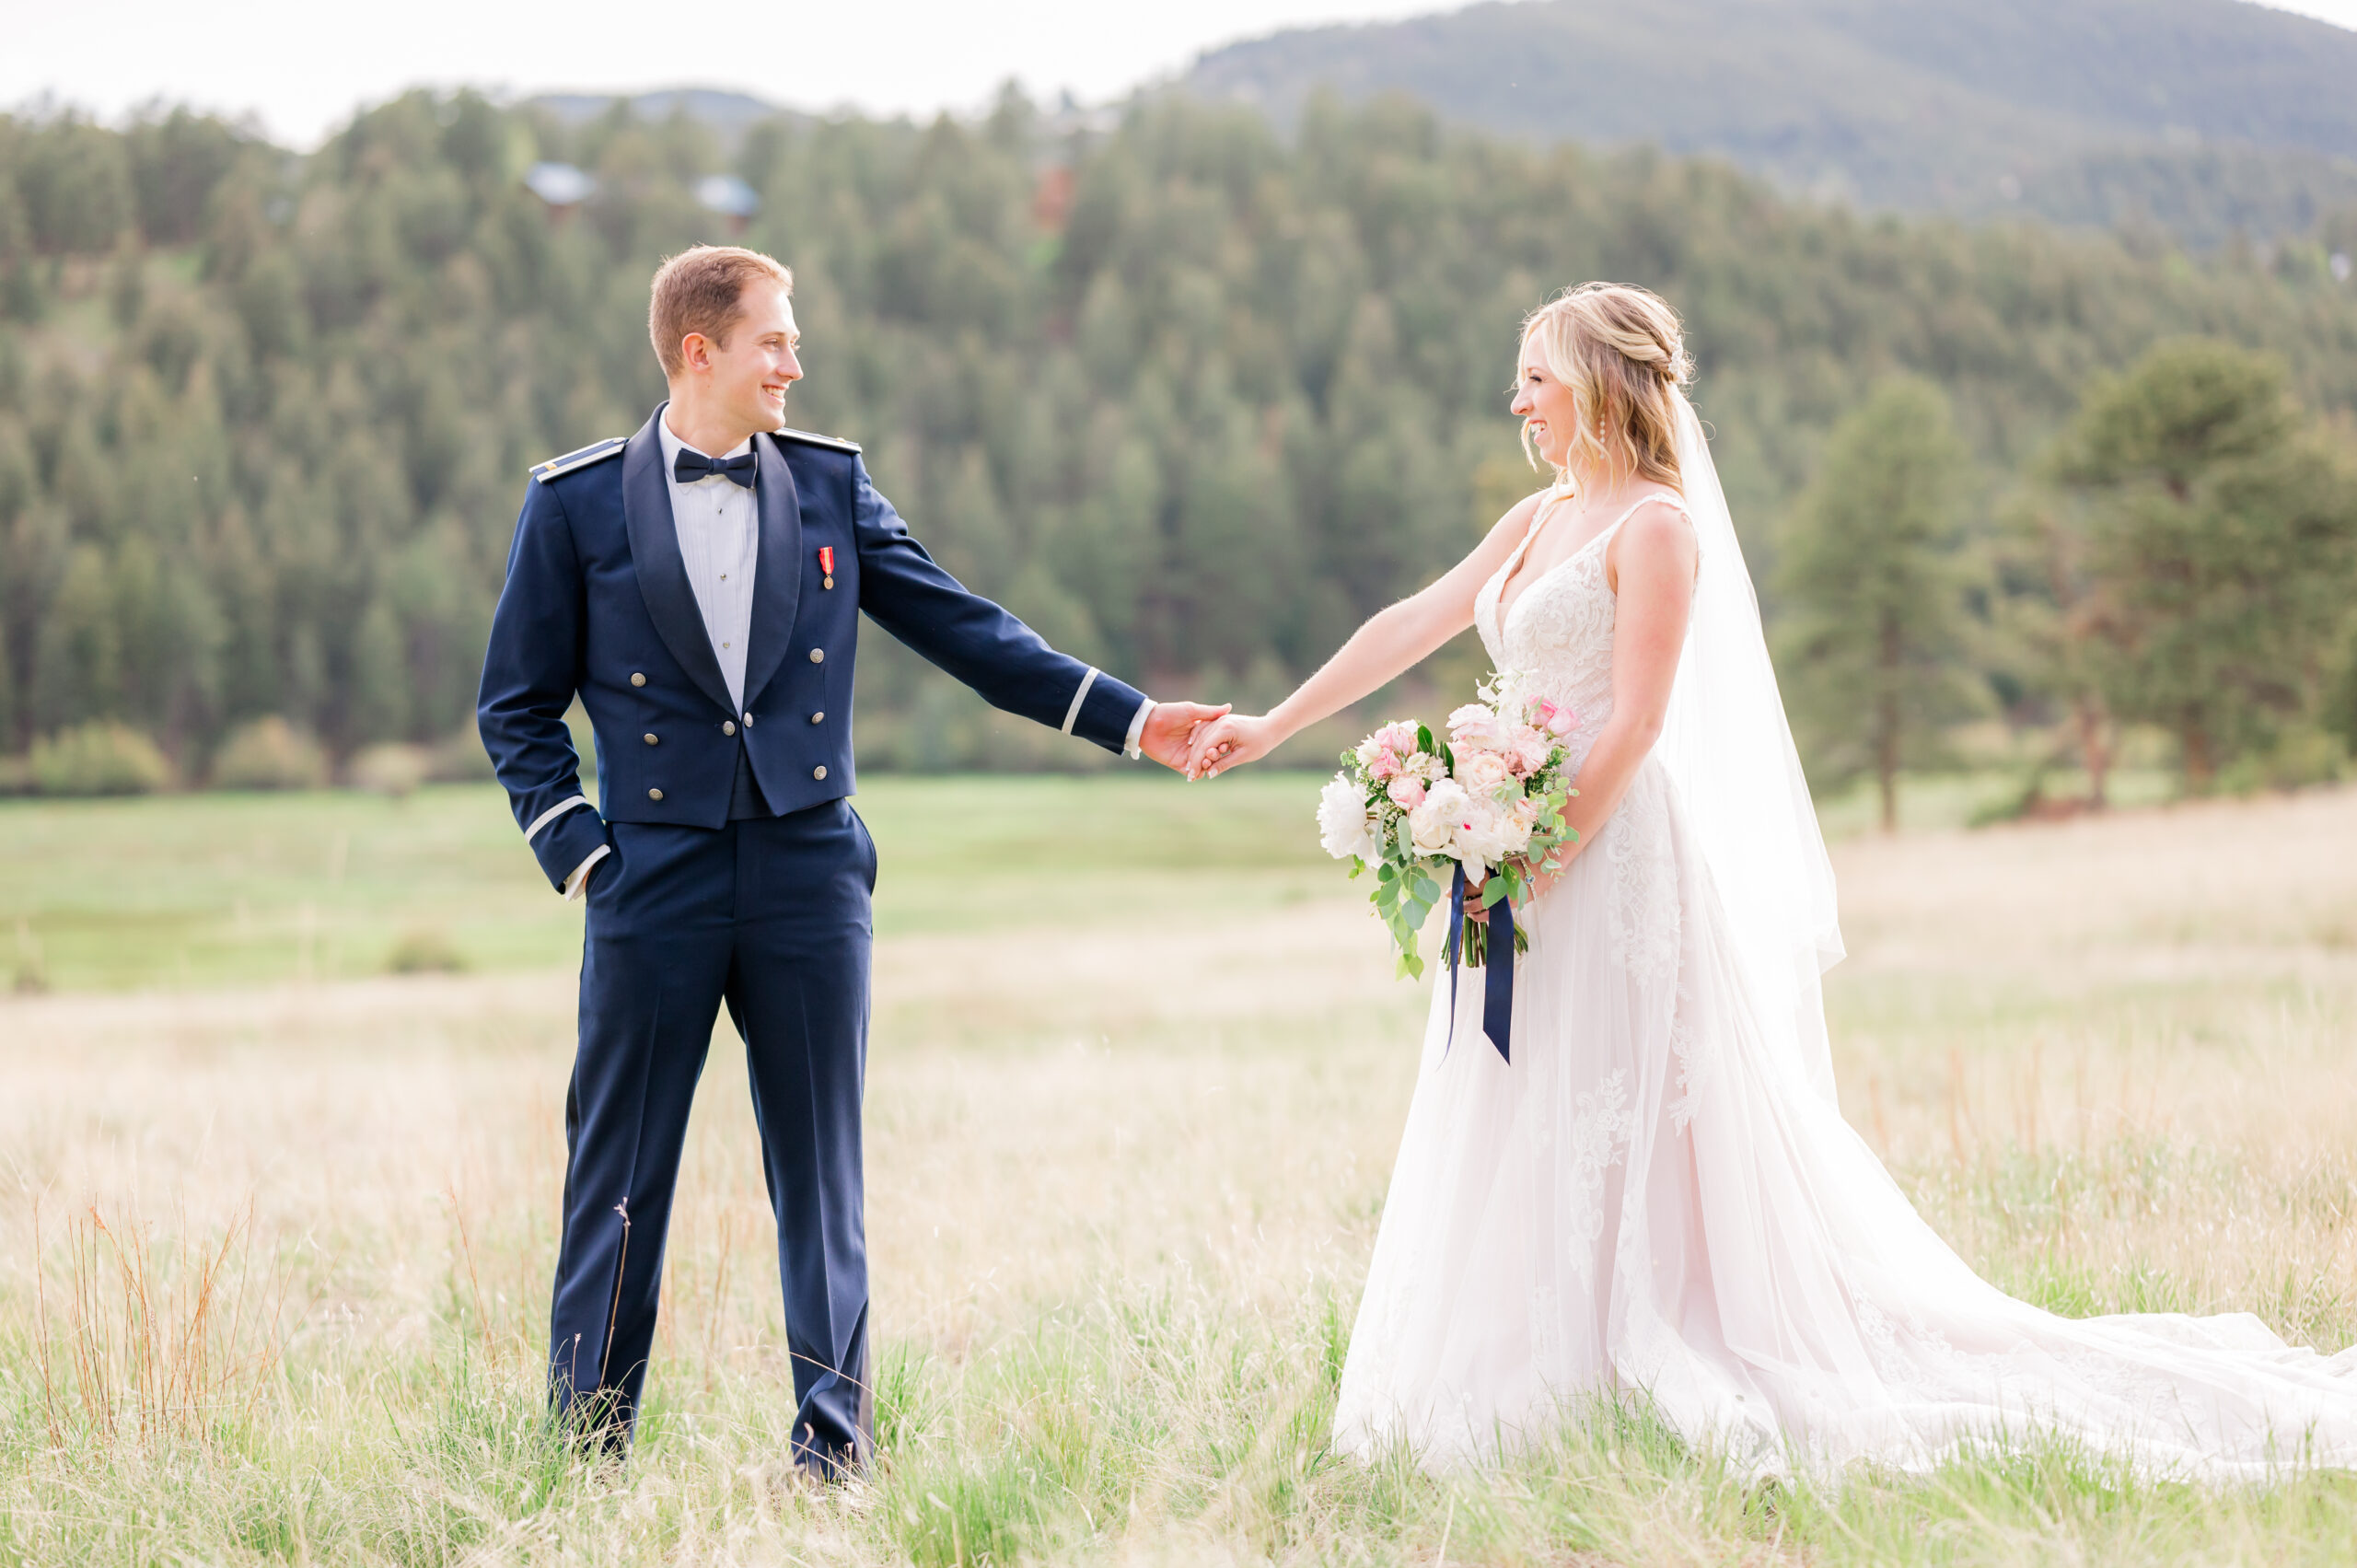 Landry + Luke Destination Wedding at Deer Creek Valley Ranch | Britni Girard Photography - Colorado Wedding Photographer